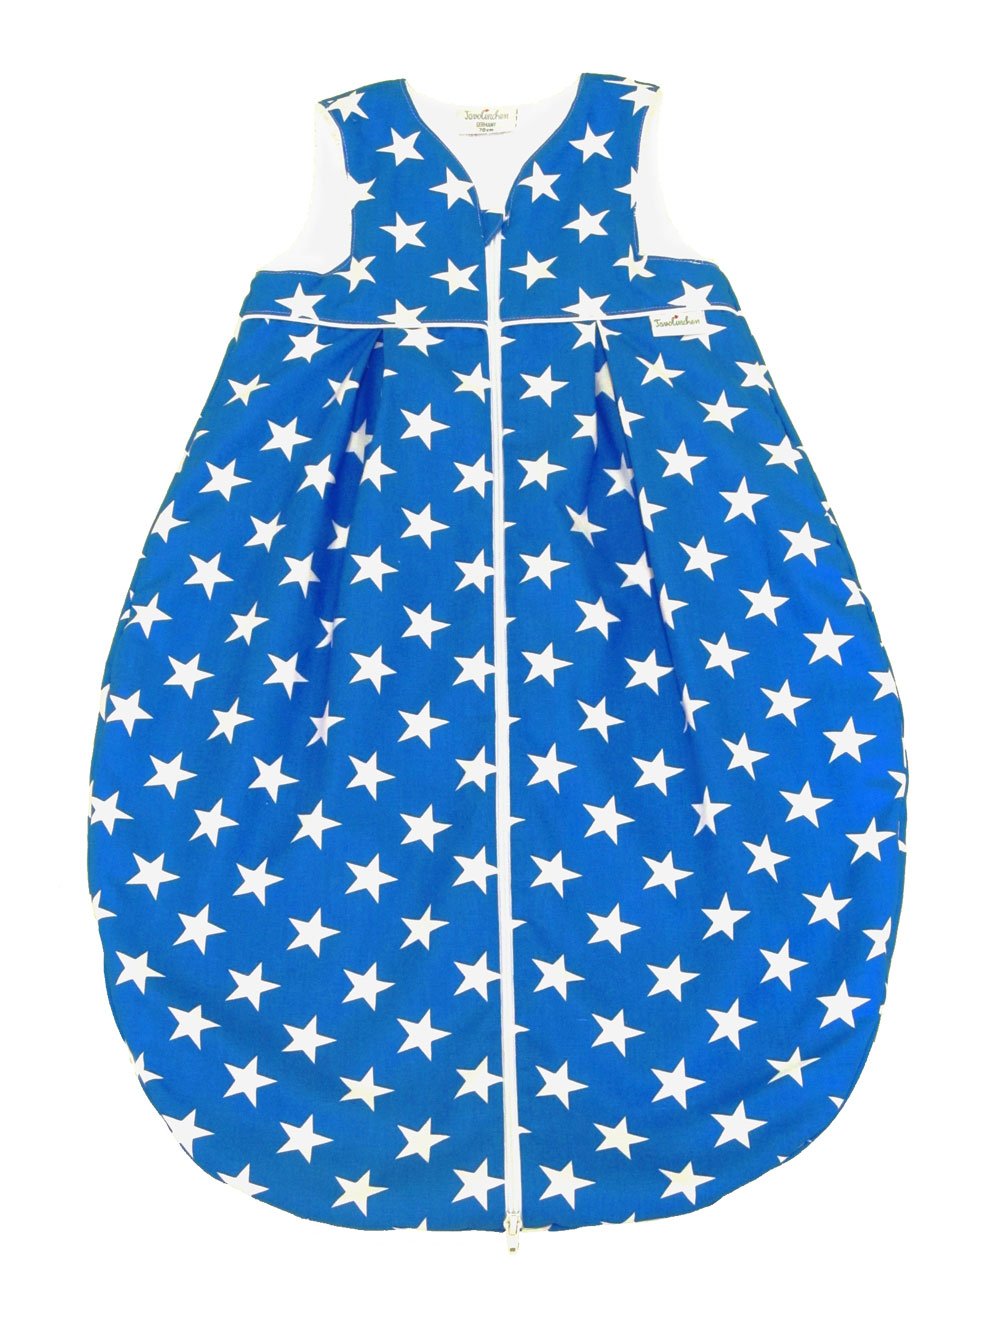 Tavolinchen 35/59 – 130 130 cm Terry Cloth Sleeping Bag with Stars Design Royal Blue